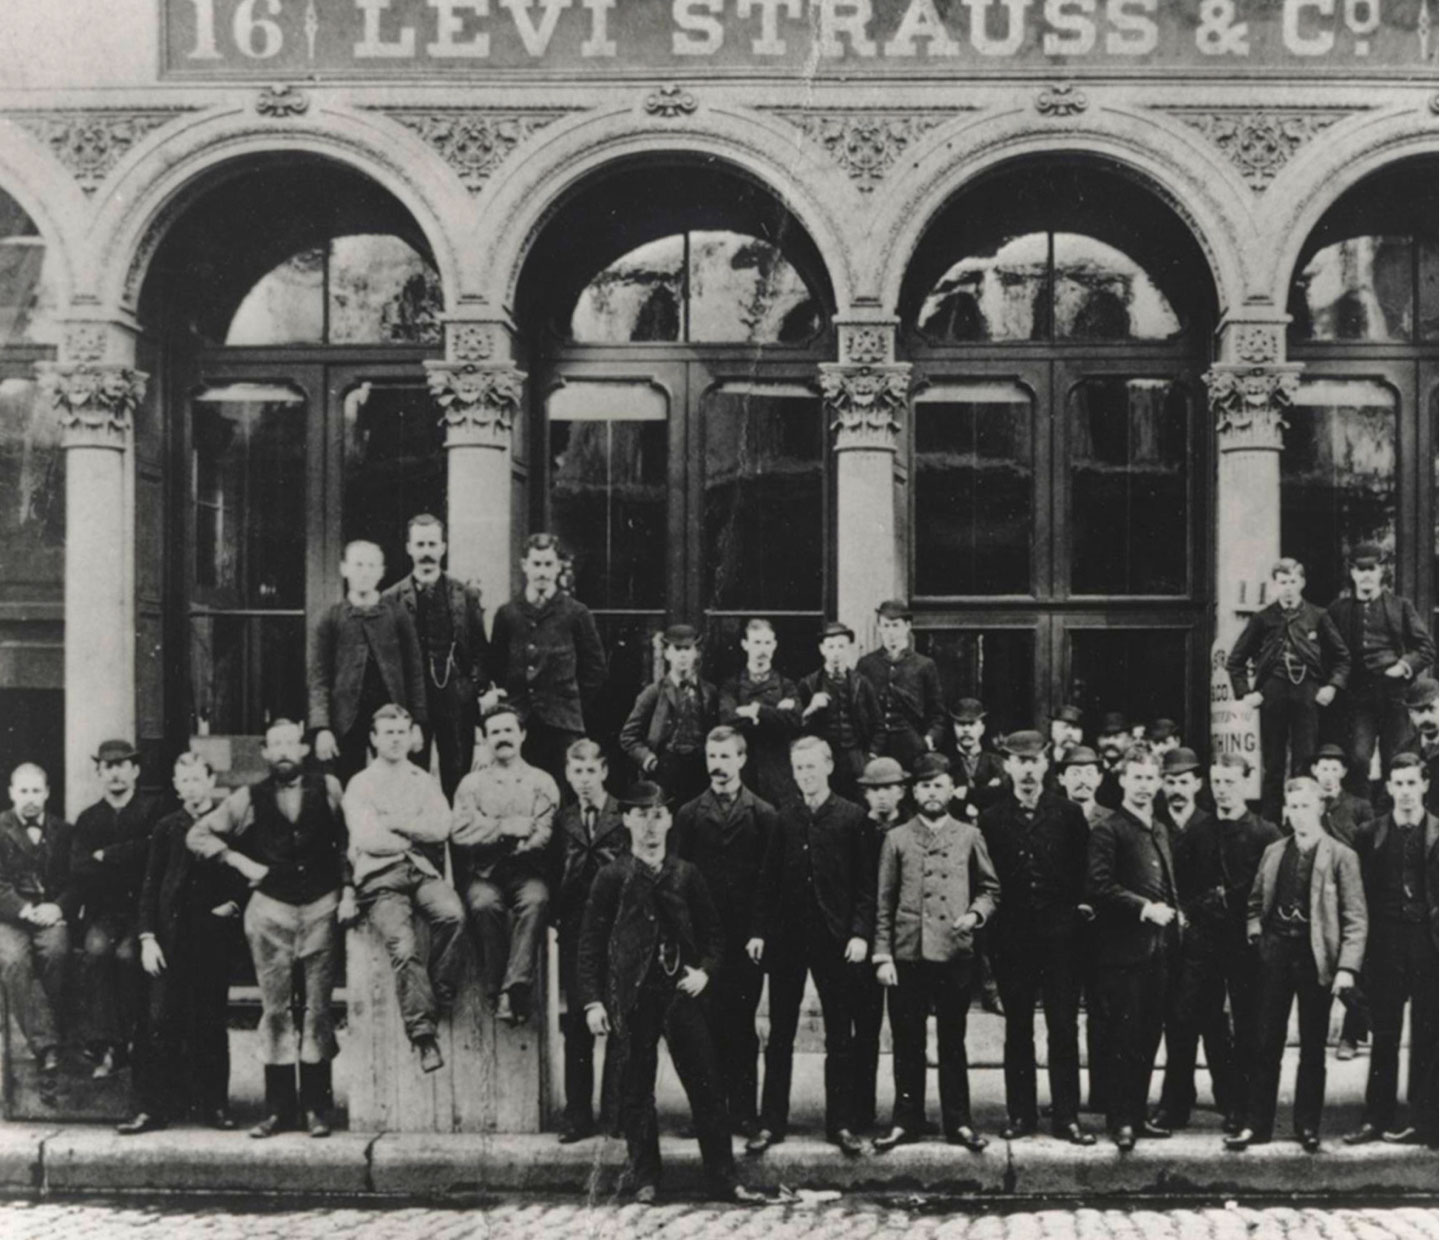 Levis History - Levi Strauss \u0026 Co 